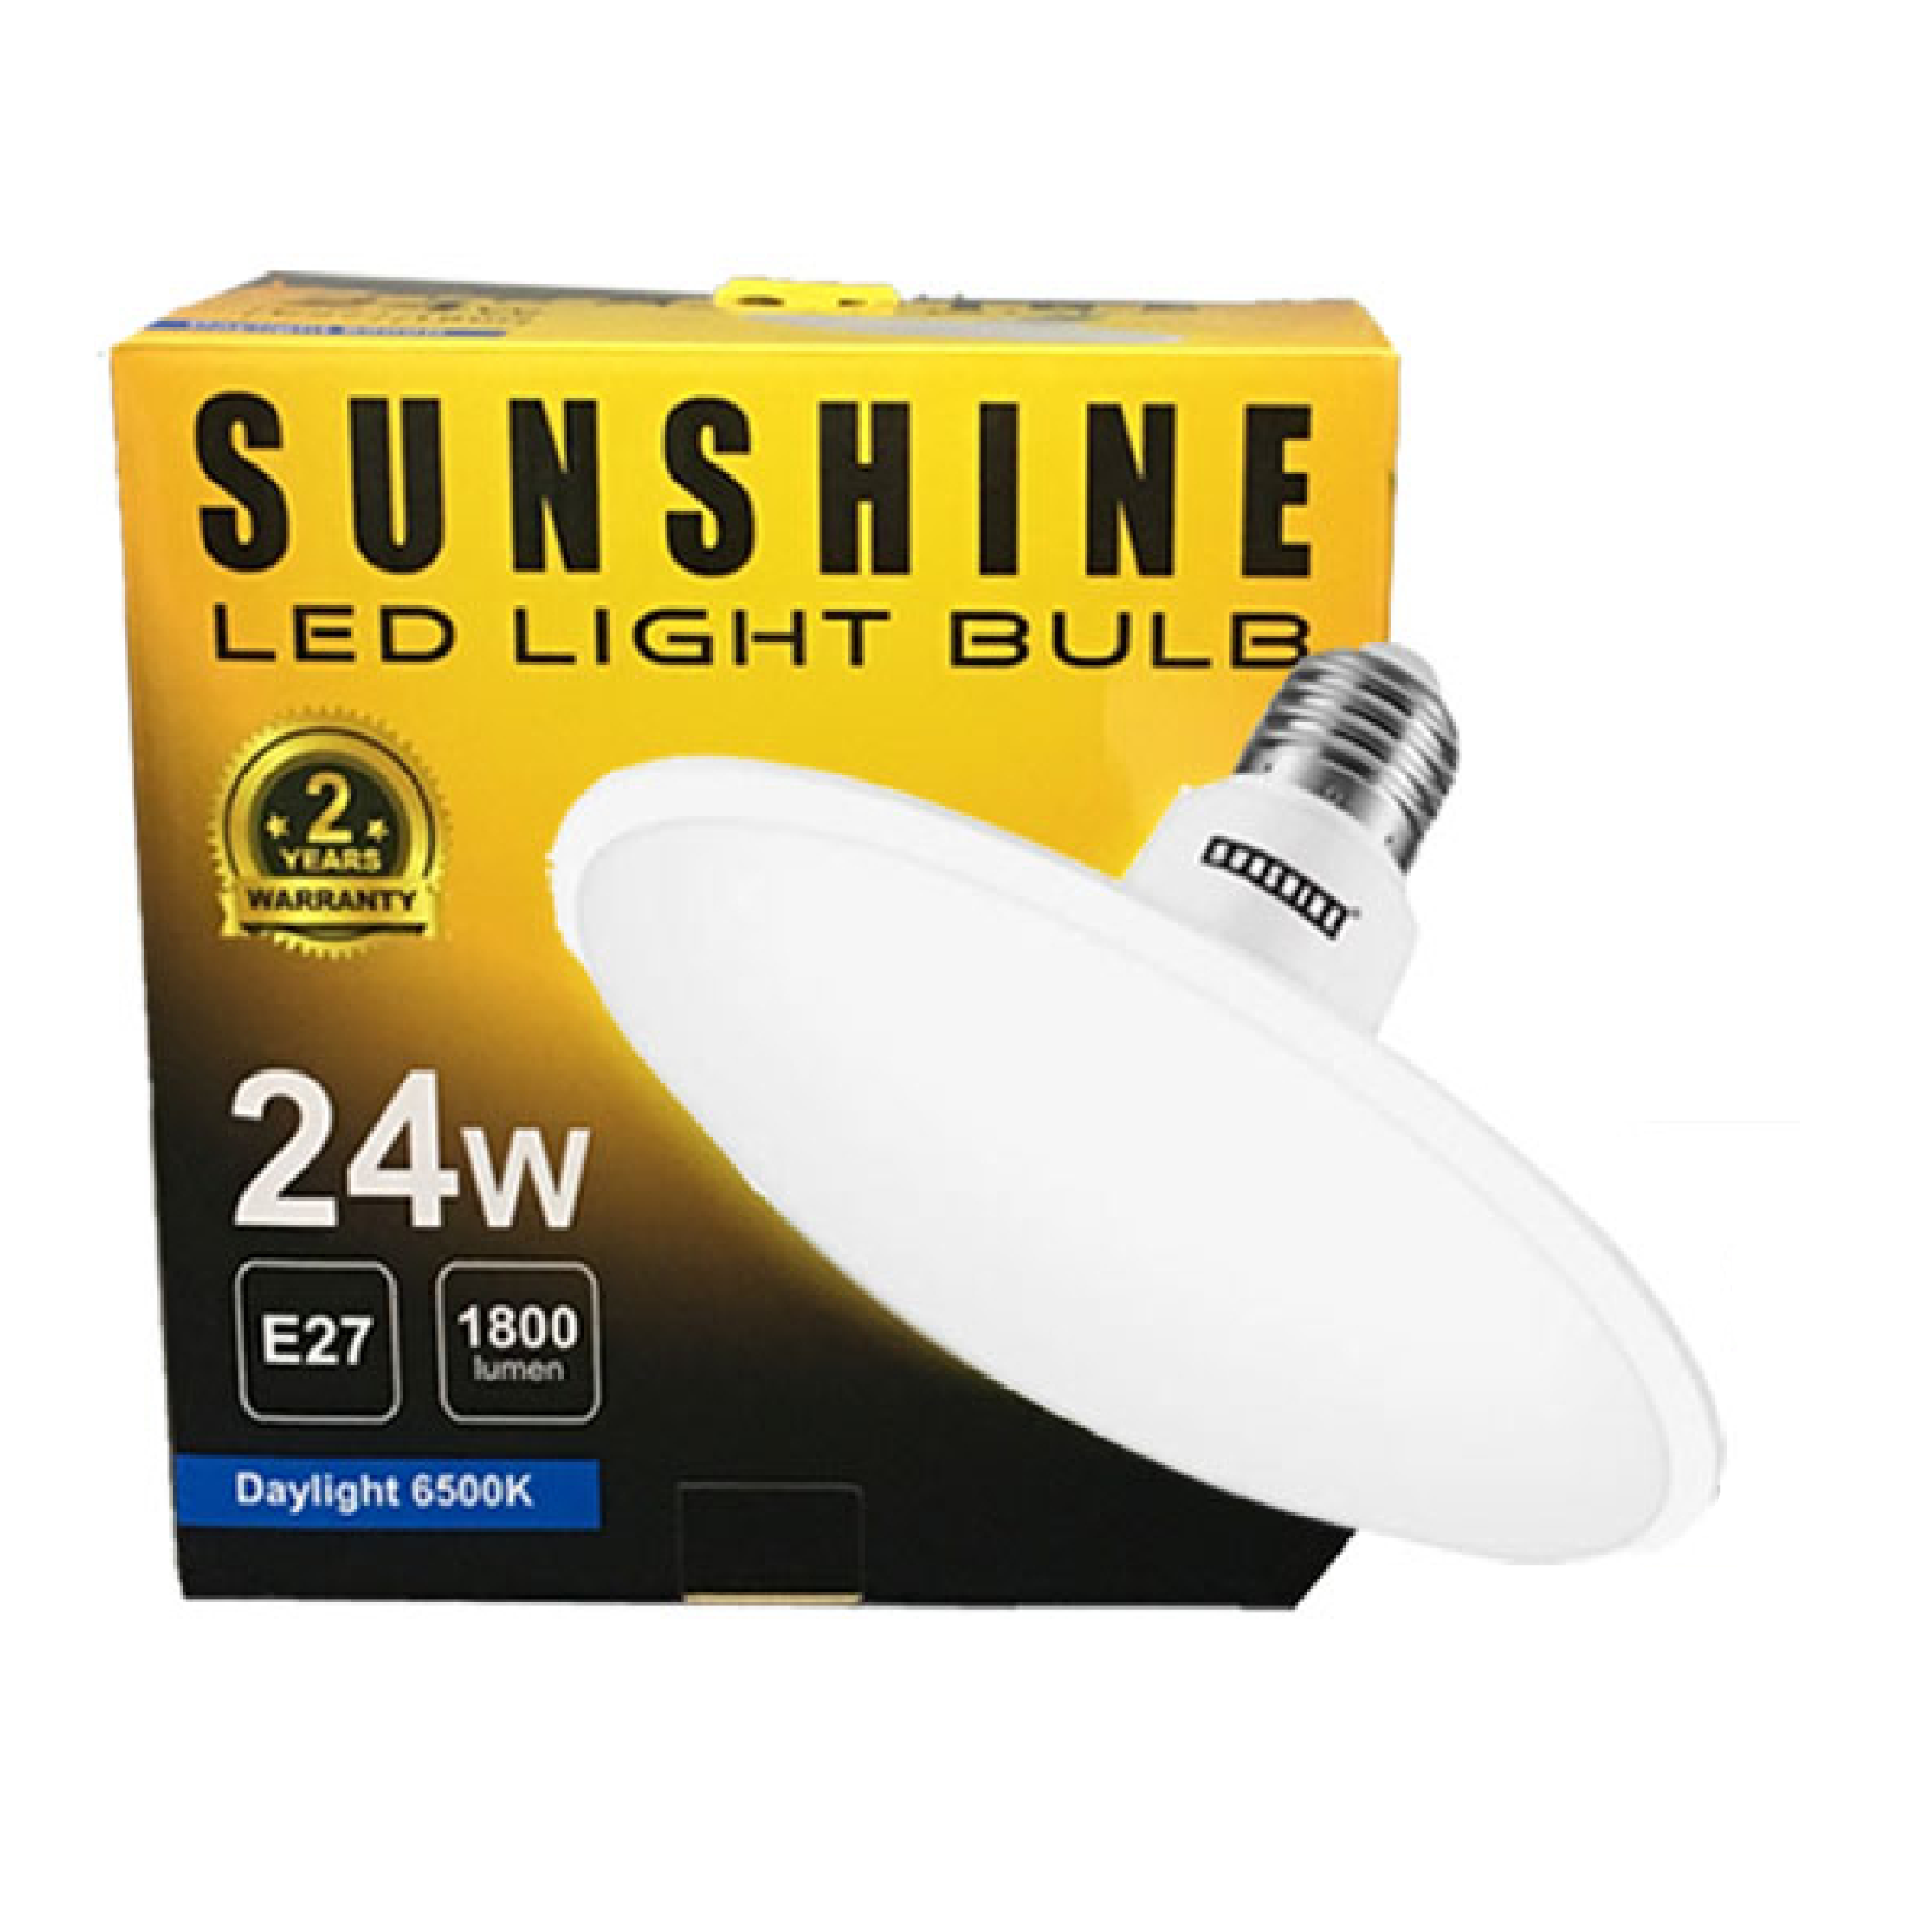 Sunshine 24W LED UFO Light Bulb E27 (1800 Lumens)